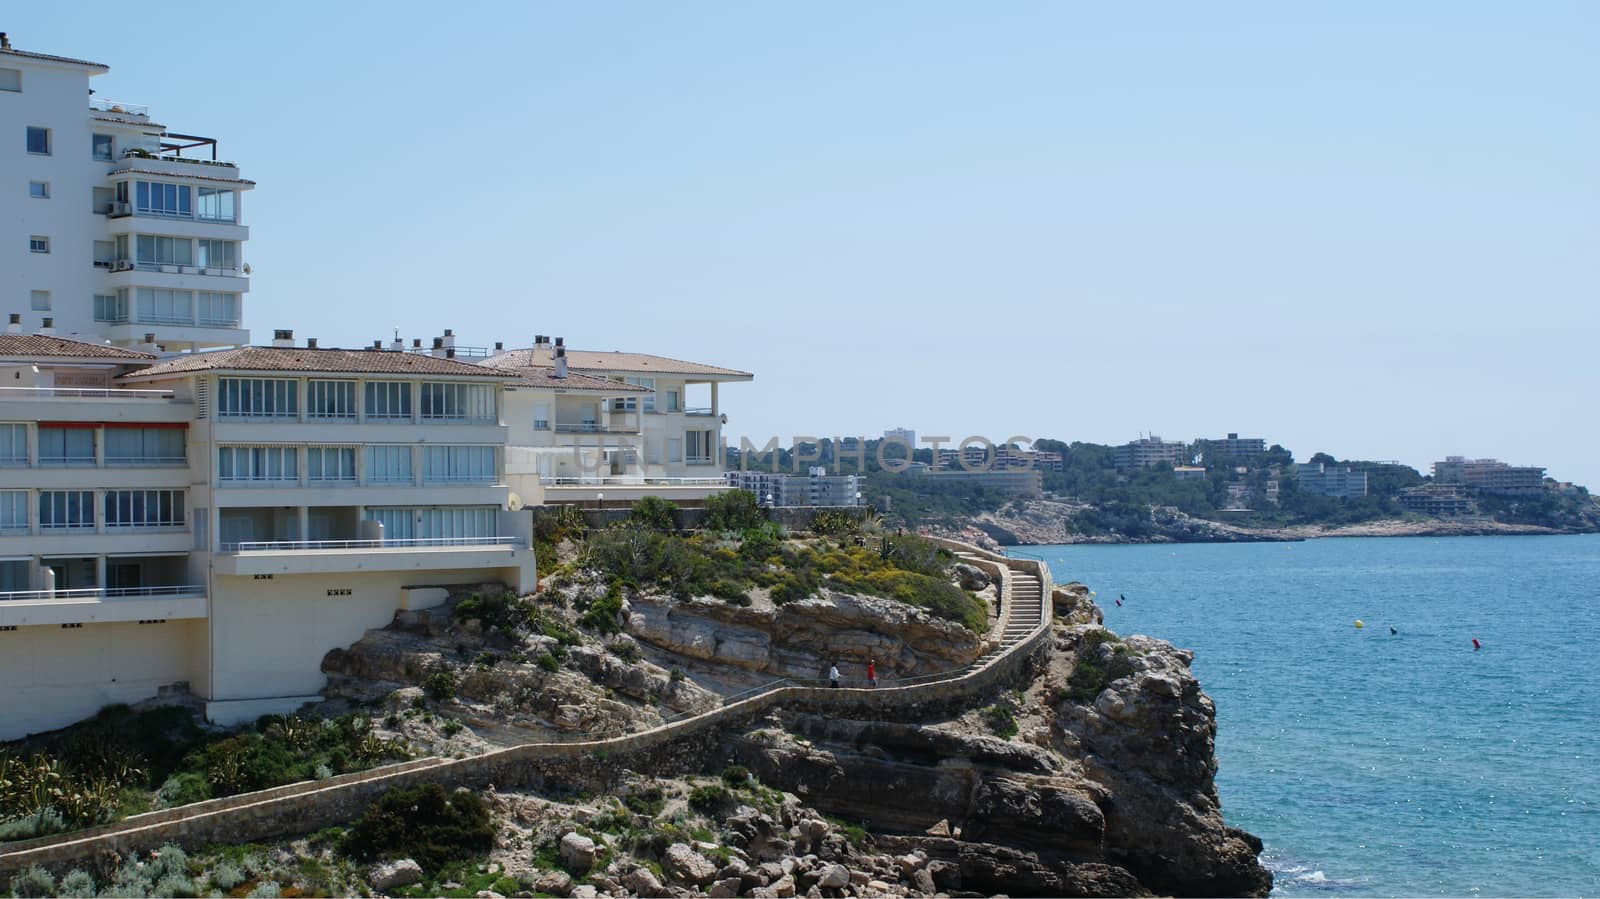 Hotels near the sea, nice resort in Spain